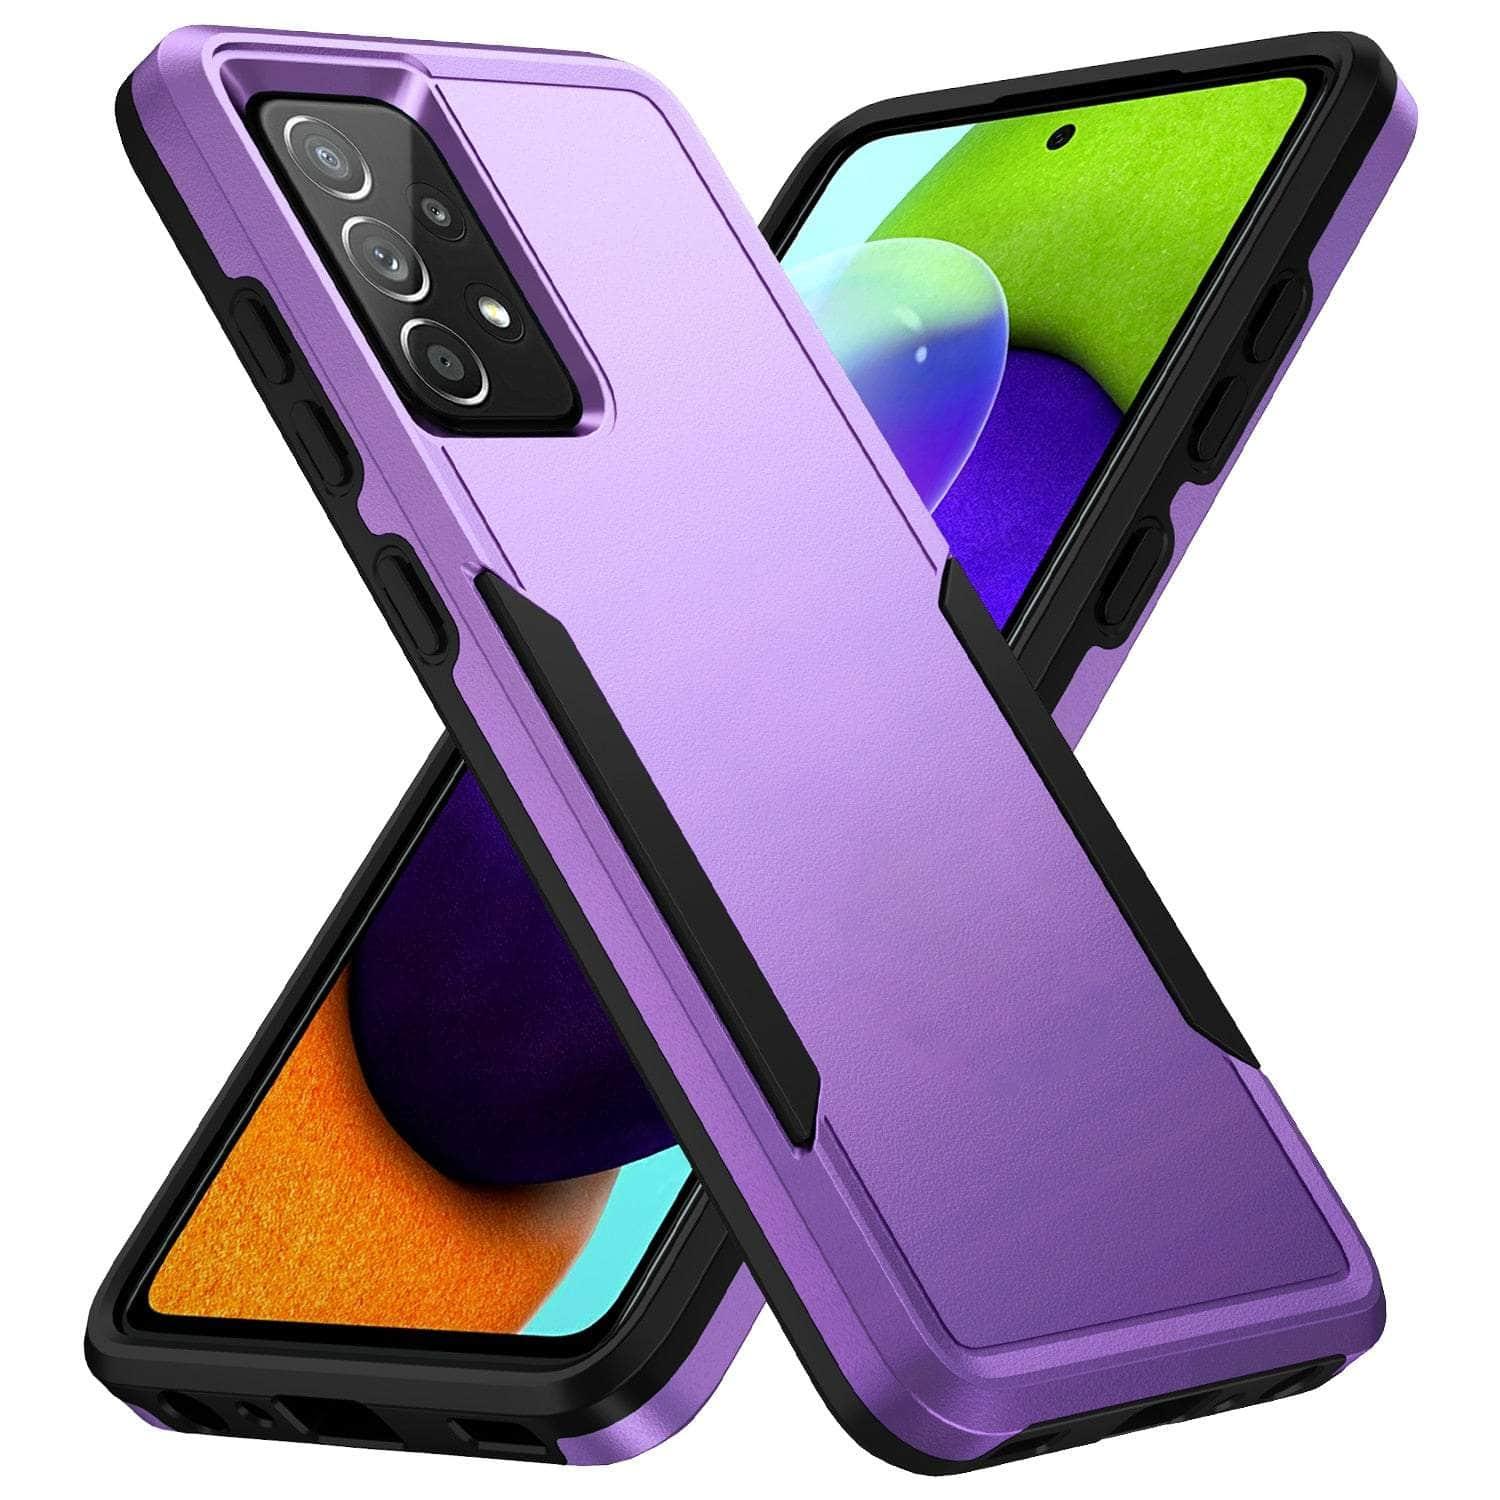 Casebuddy purple / for Samsung A73 5G Shockproof Precise Cutout Galaxy A73 Case